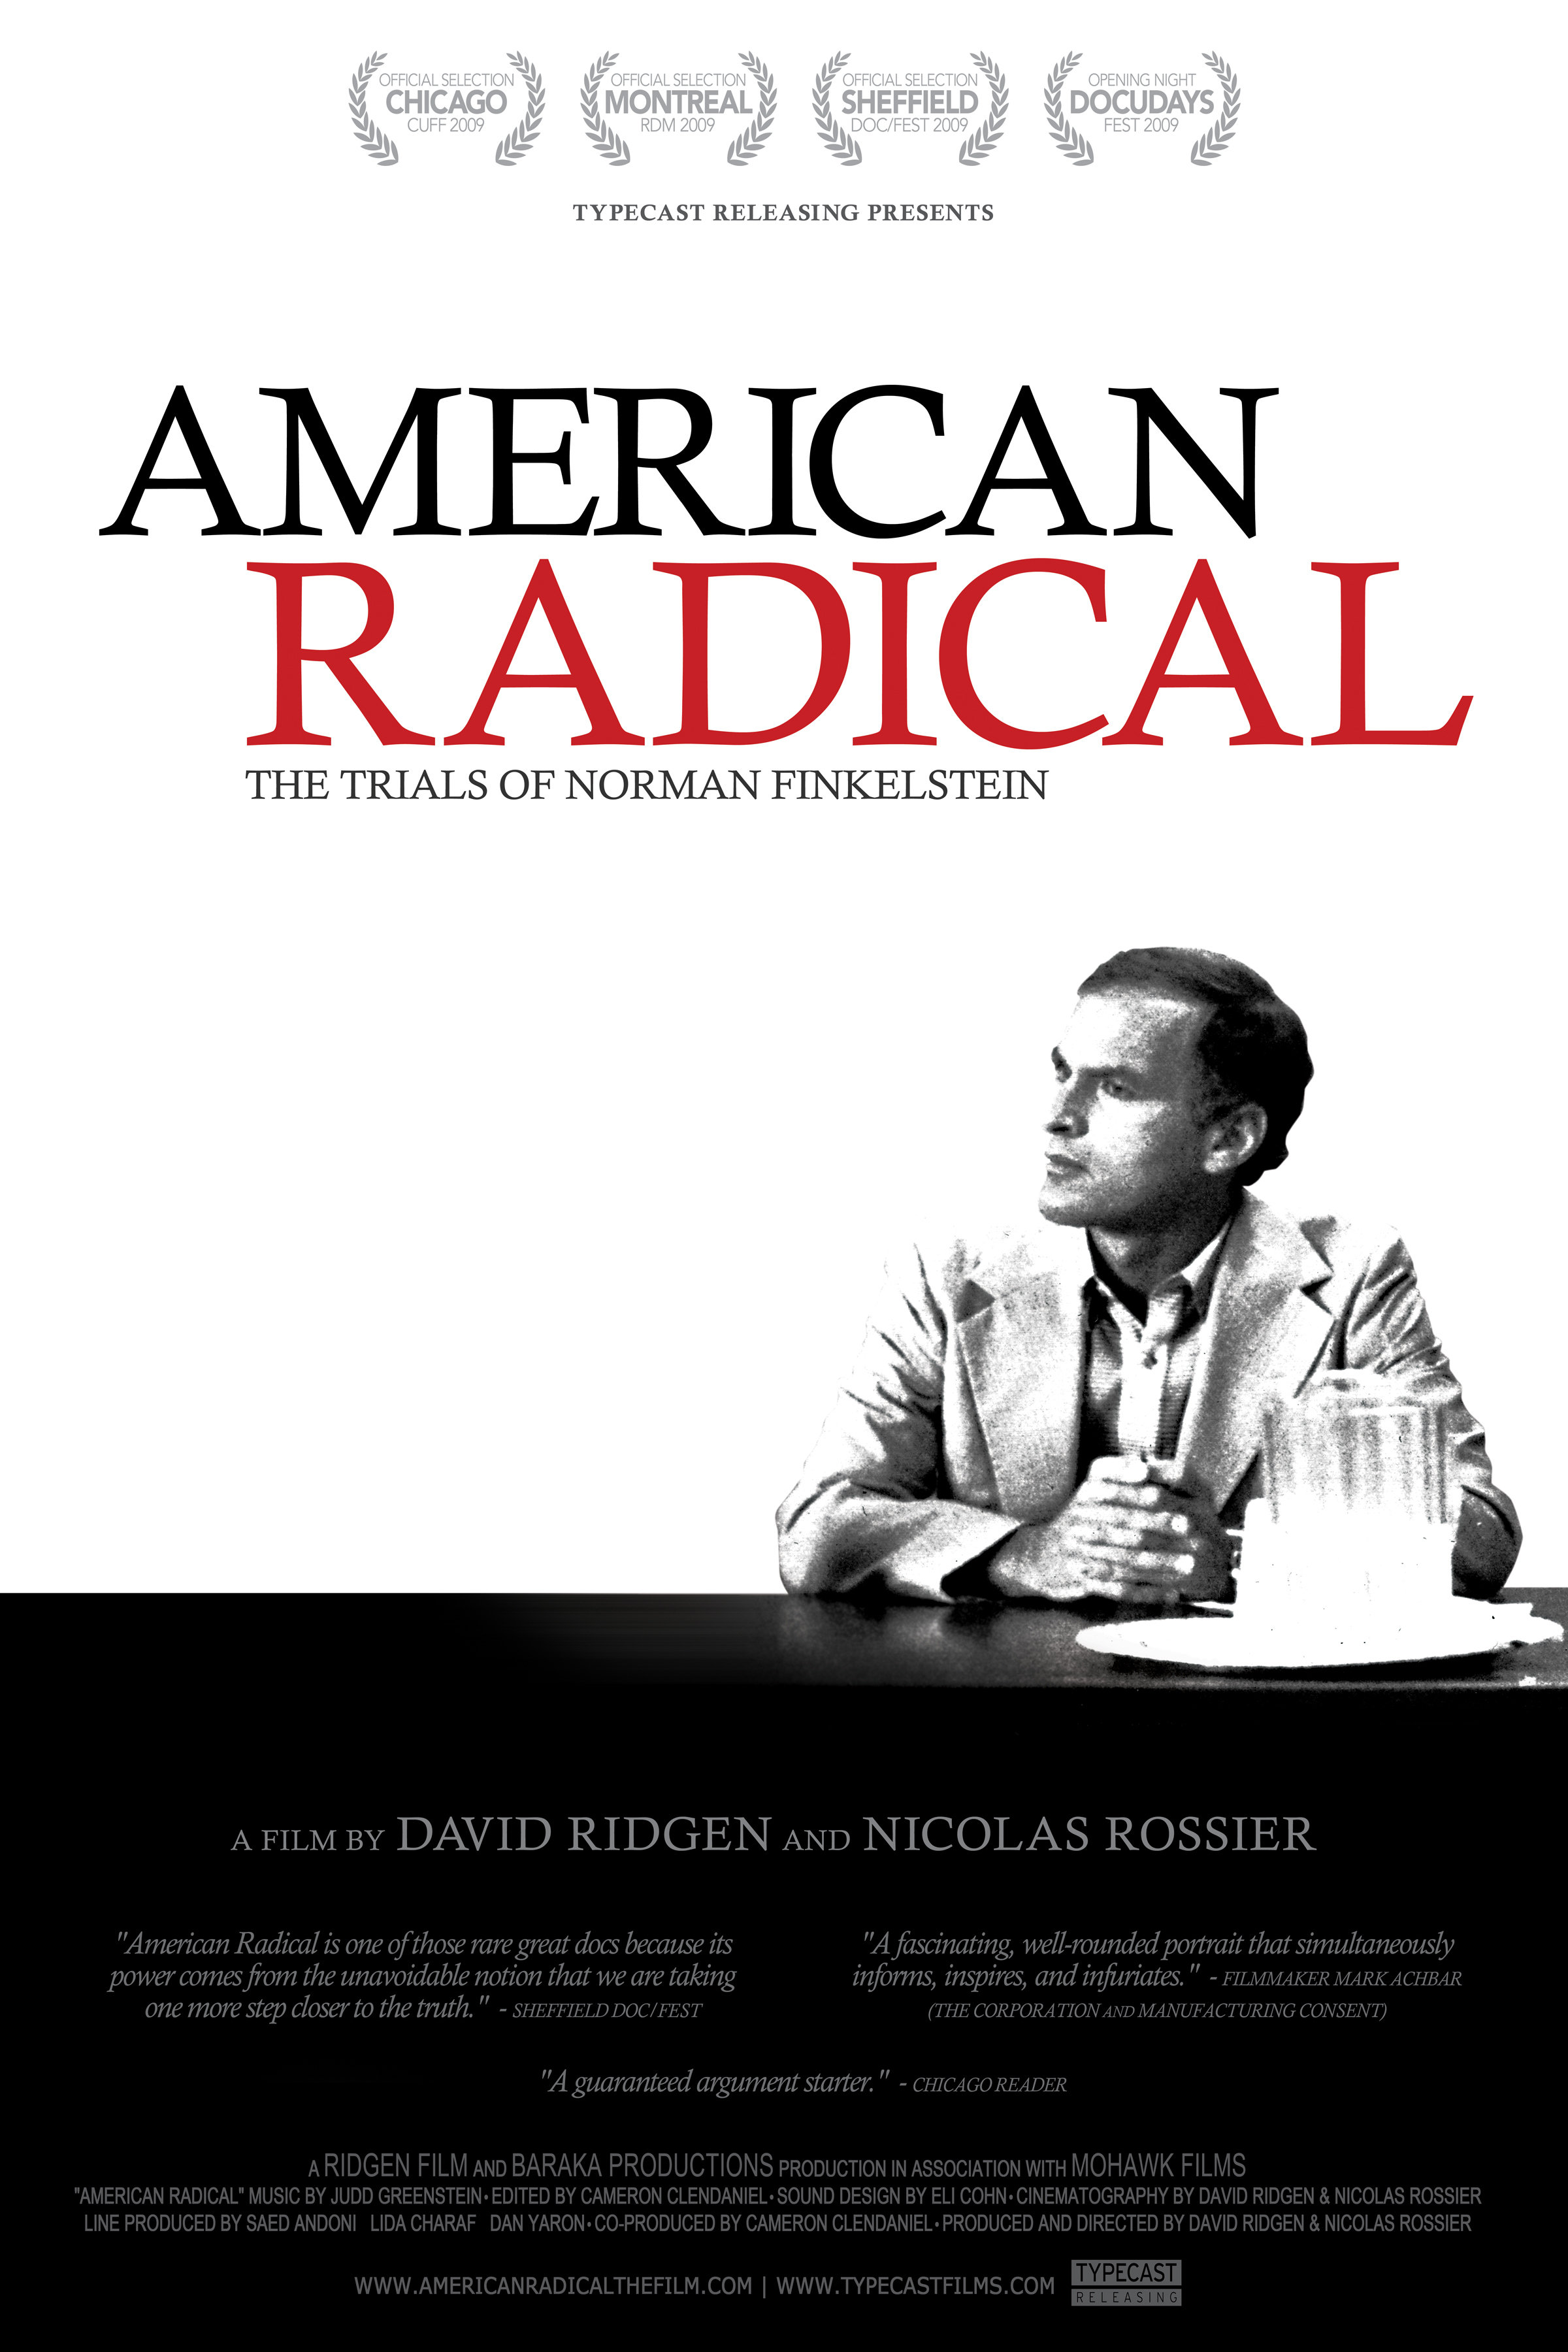 American Radical: The Trials of Norman Finkelstein (2009) Screenshot 1 